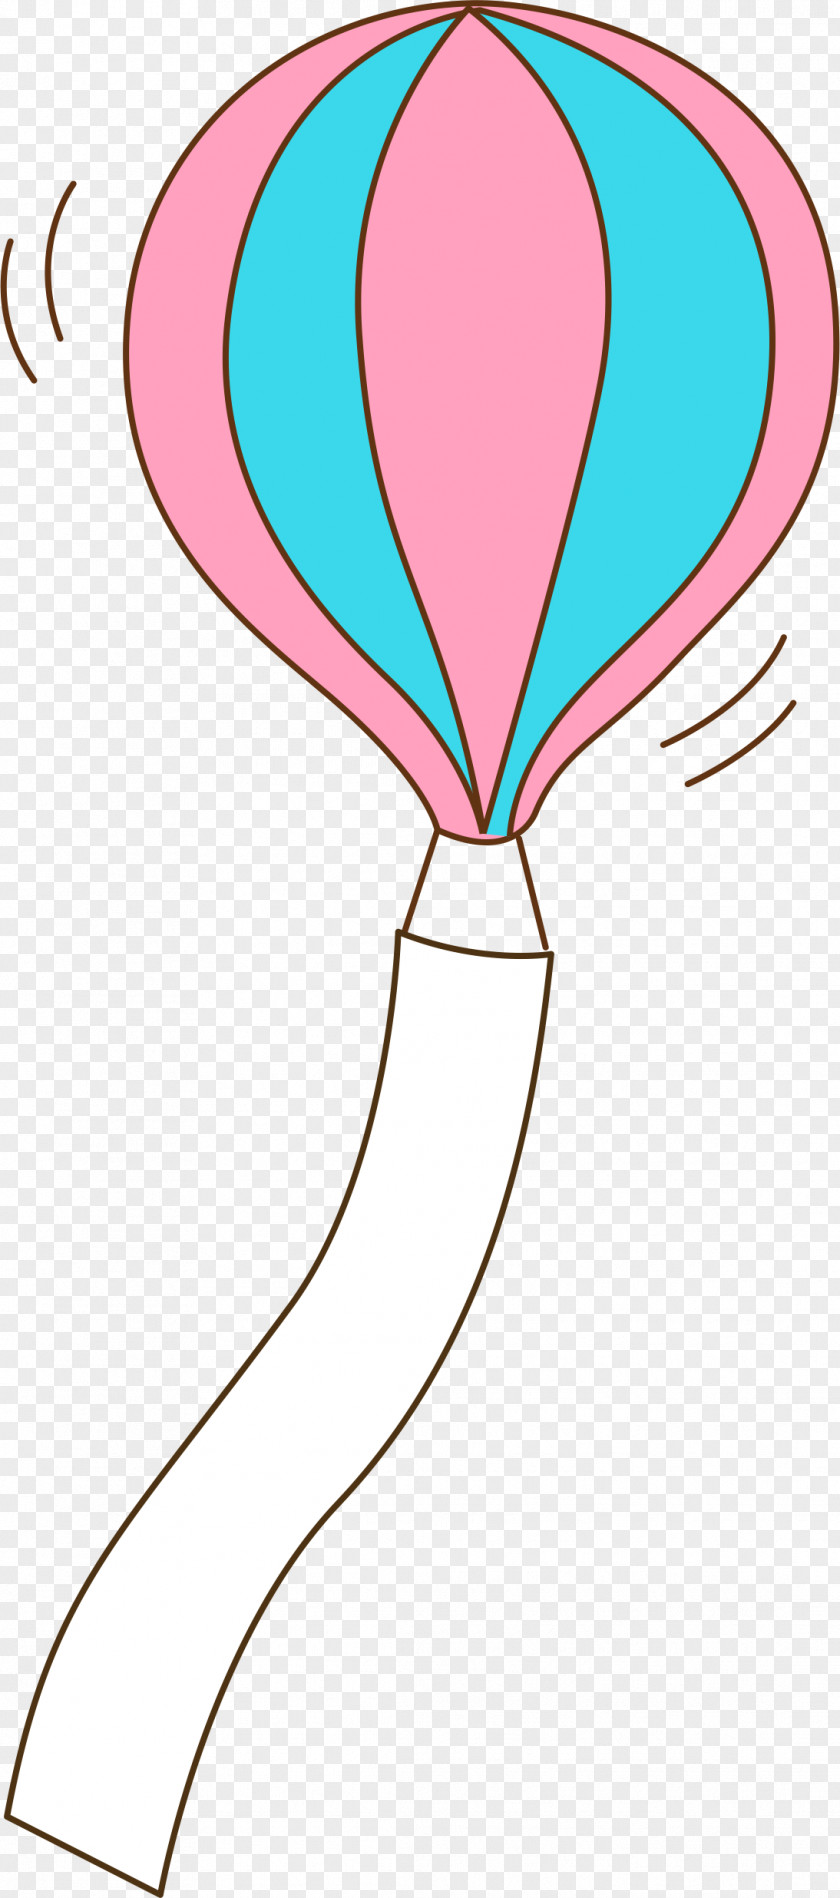 Cartoon Hot Air Balloon Banner PNG